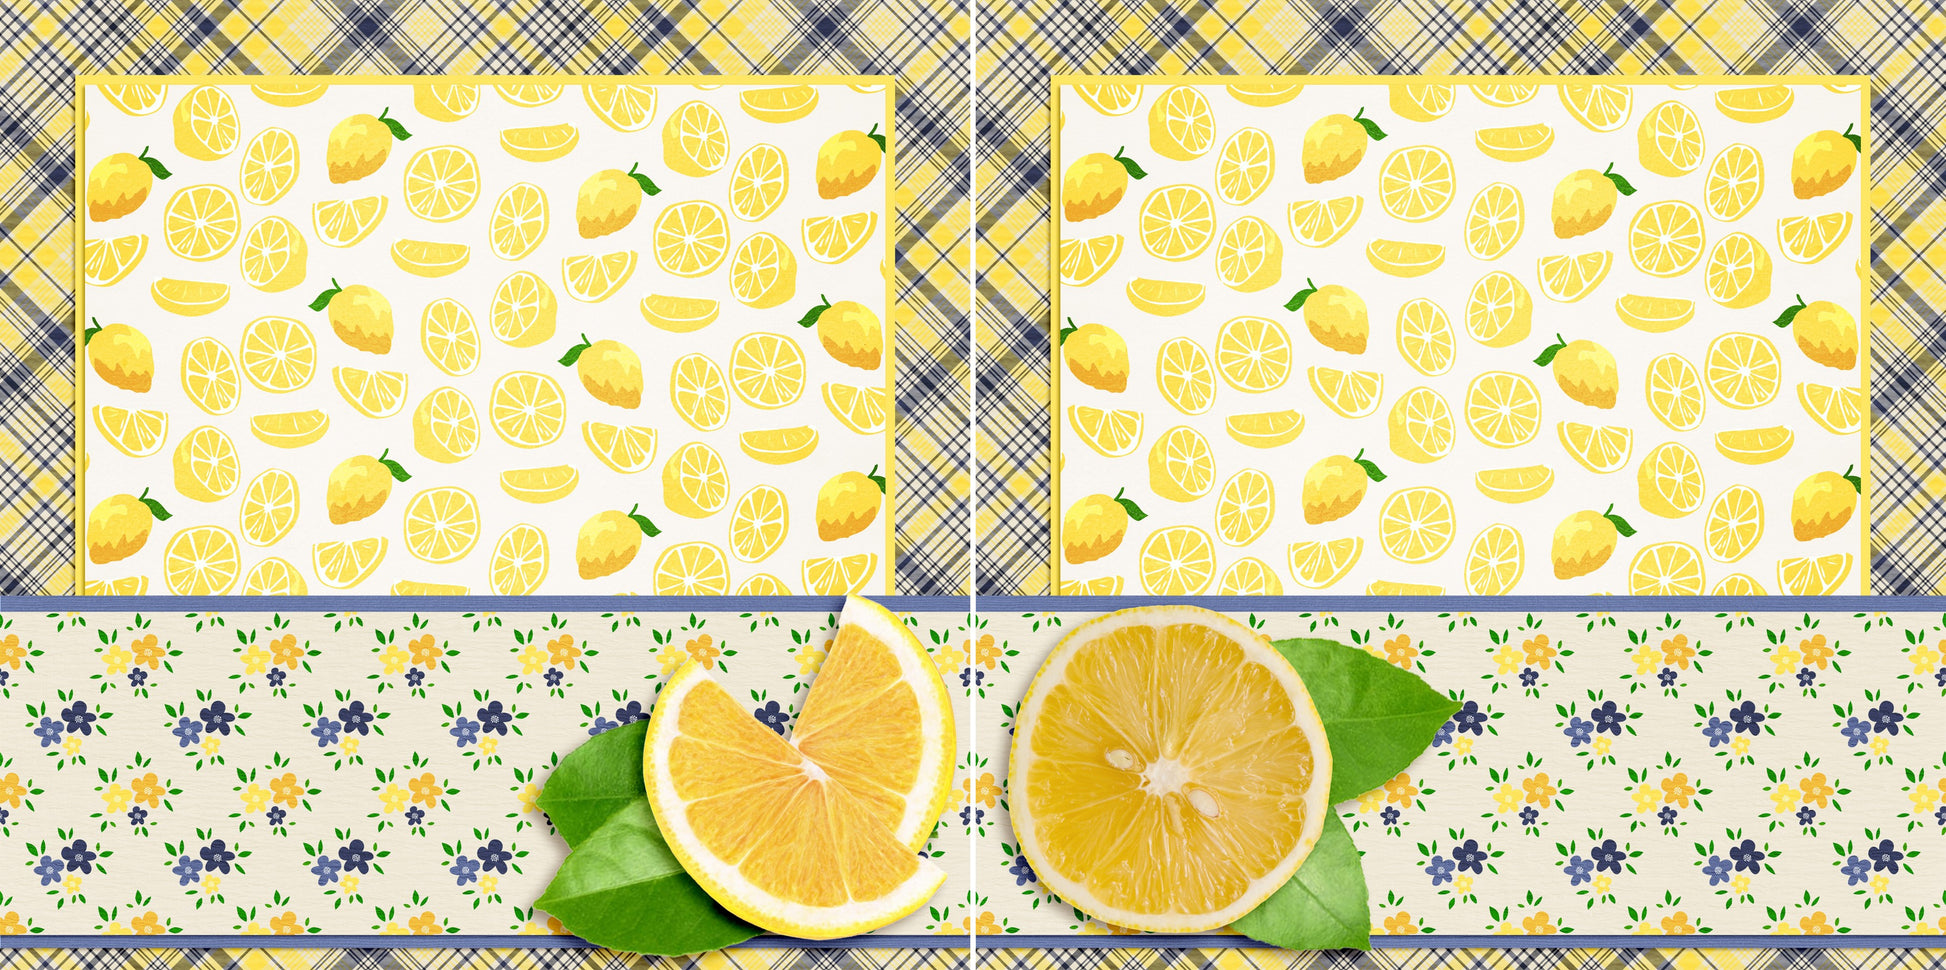 When Life Gives Lemons NPM - 5325 - EZscrapbooks Scrapbook Layouts Foods, Summer